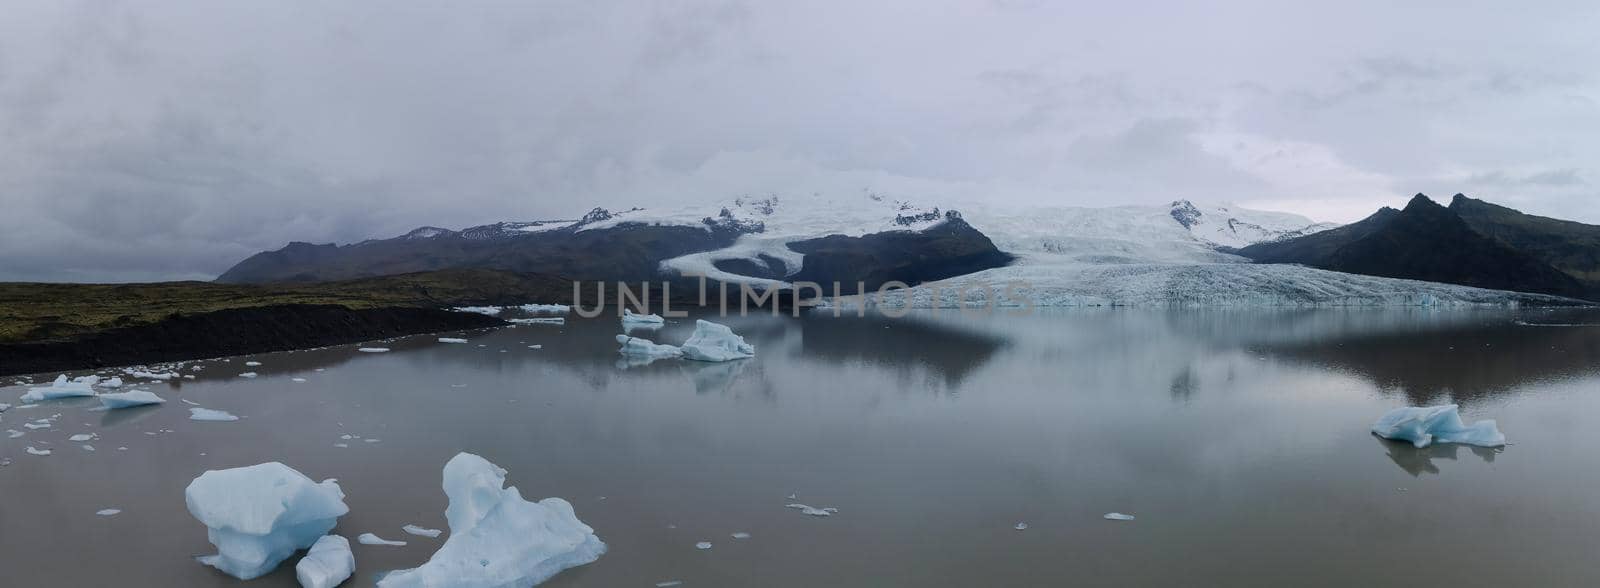 Massive glacier tongue with lake and icebergs panorama